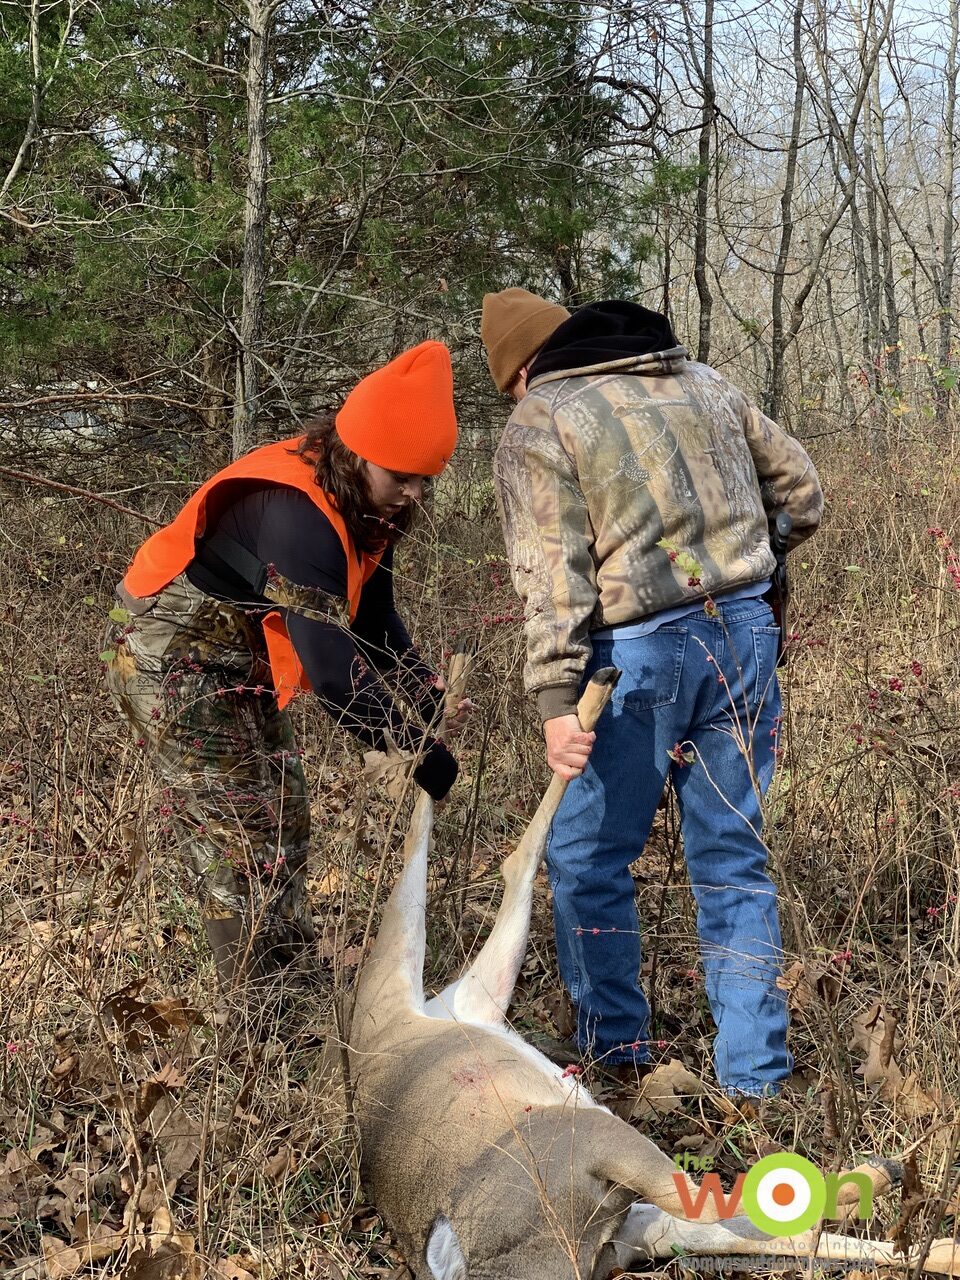 Deer drag whitetail success. hunt